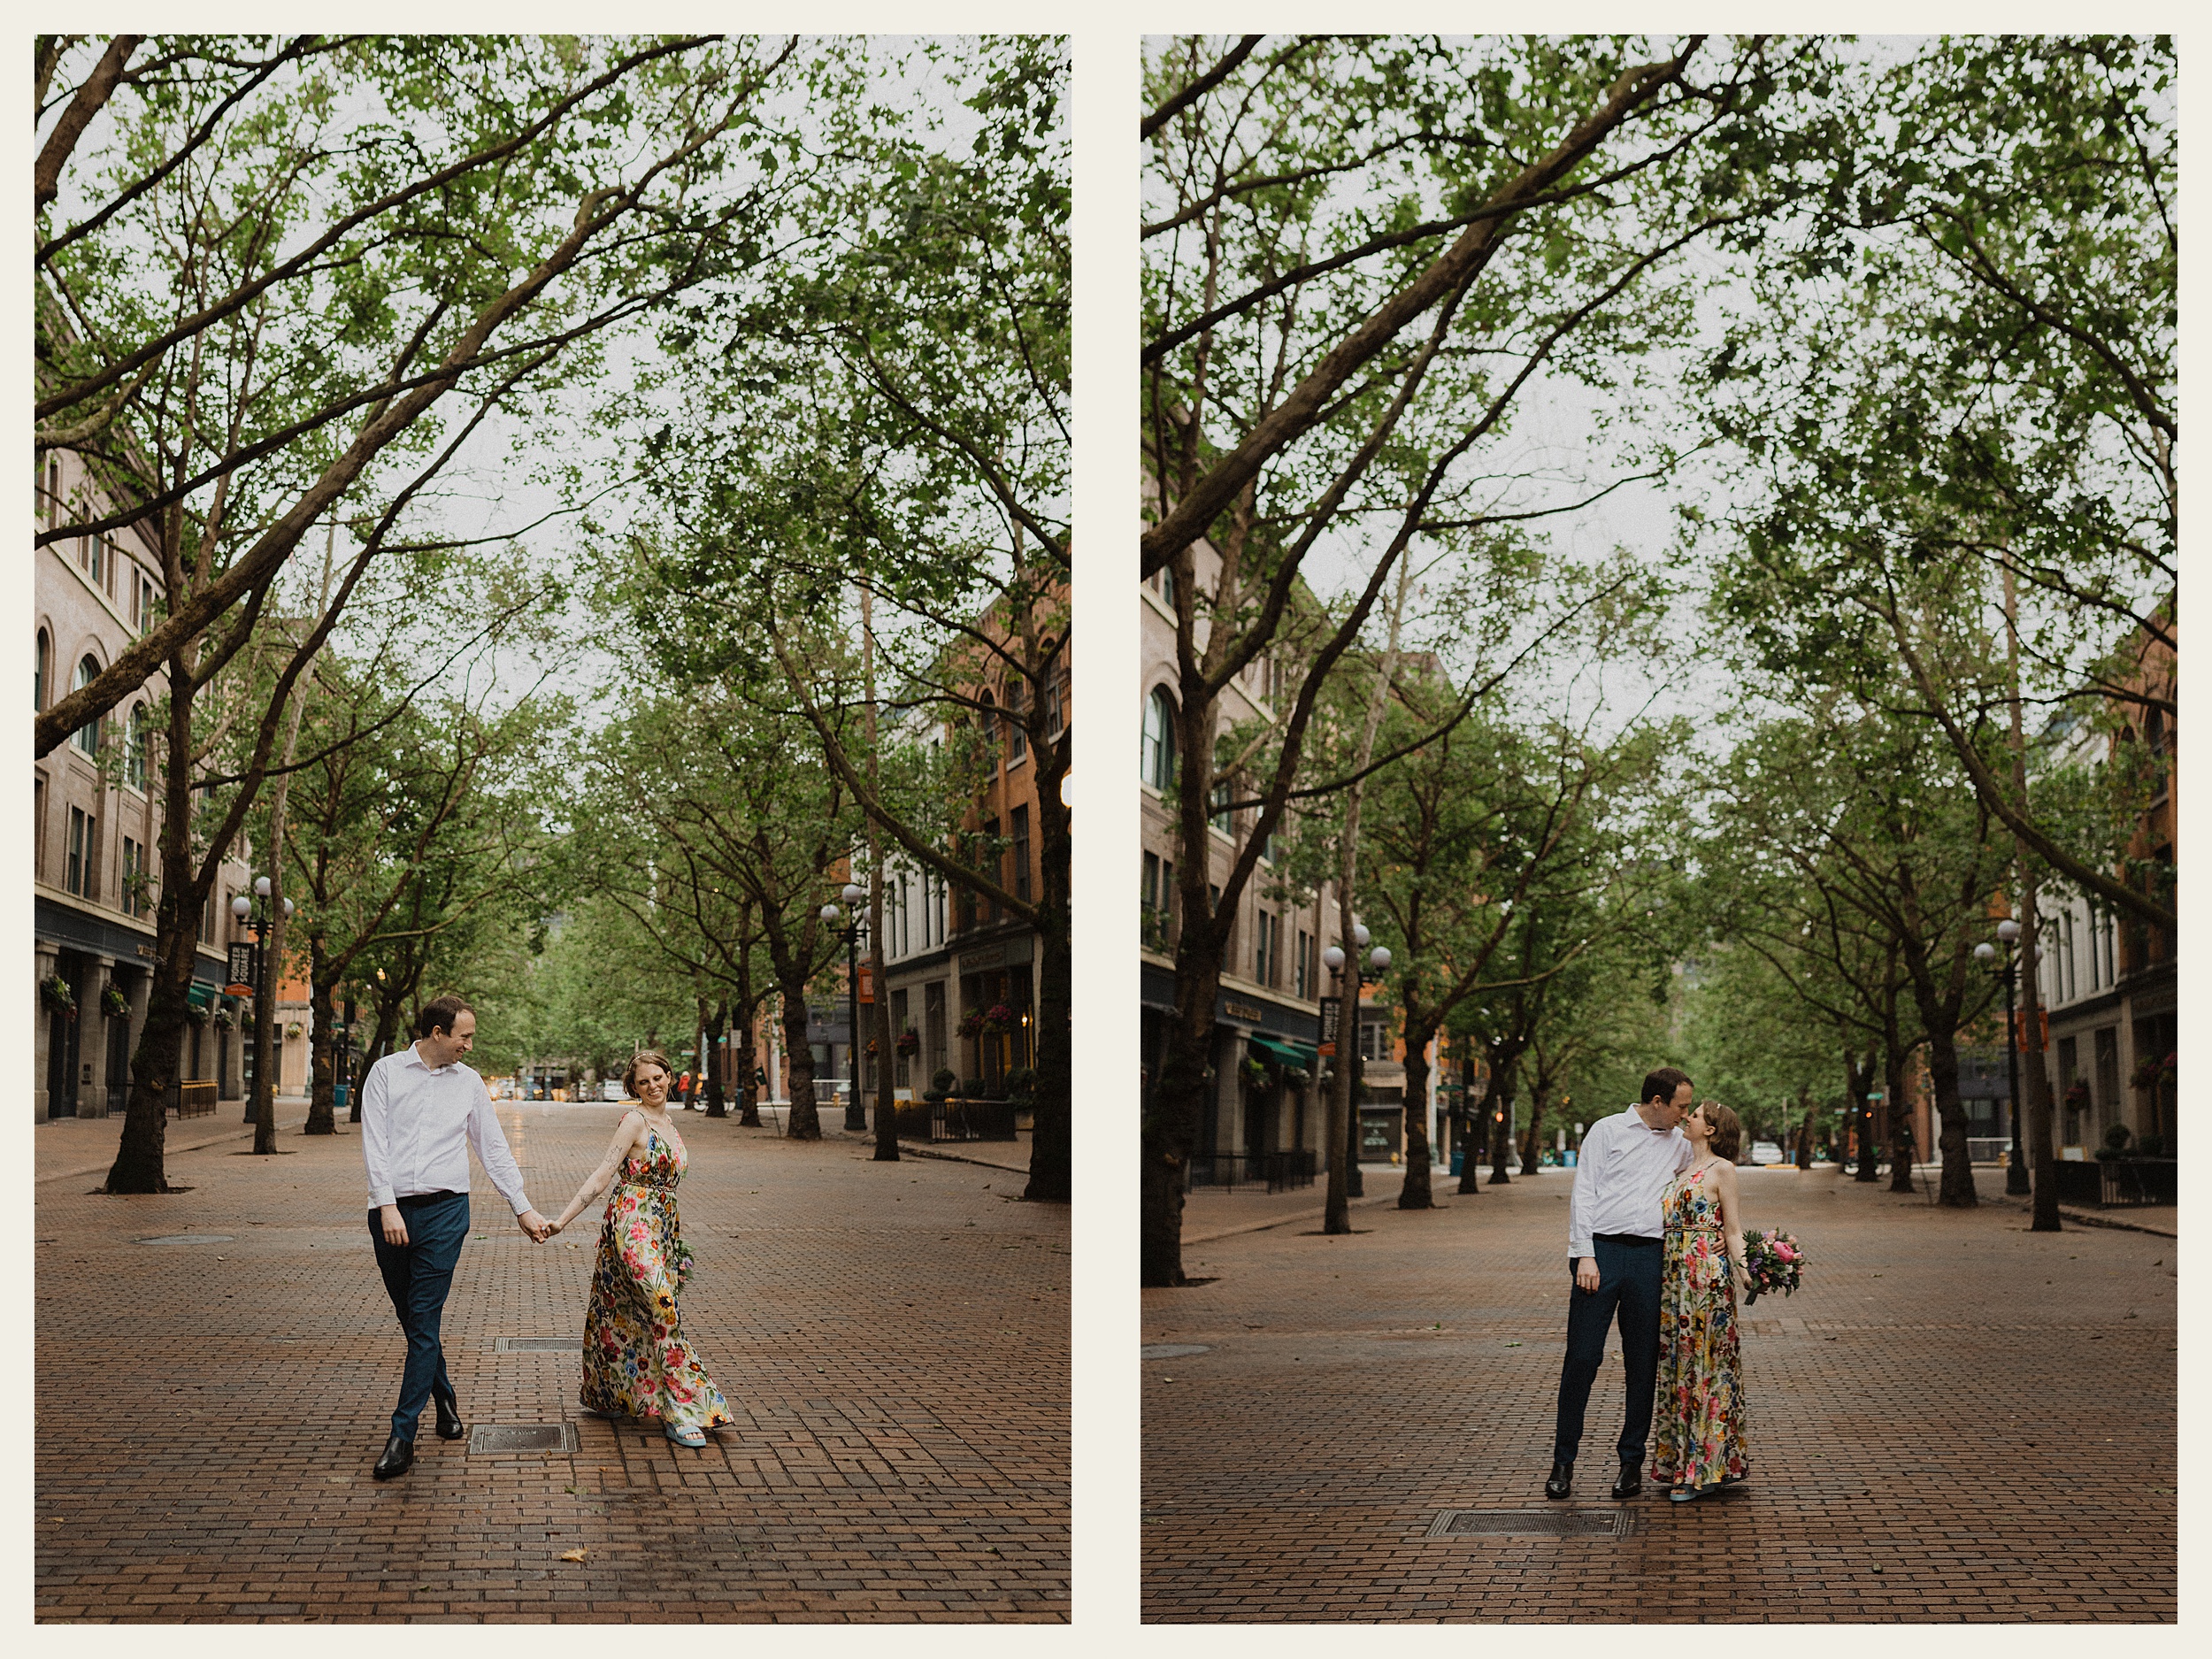 bride and groom walking together pioneer square landscape

